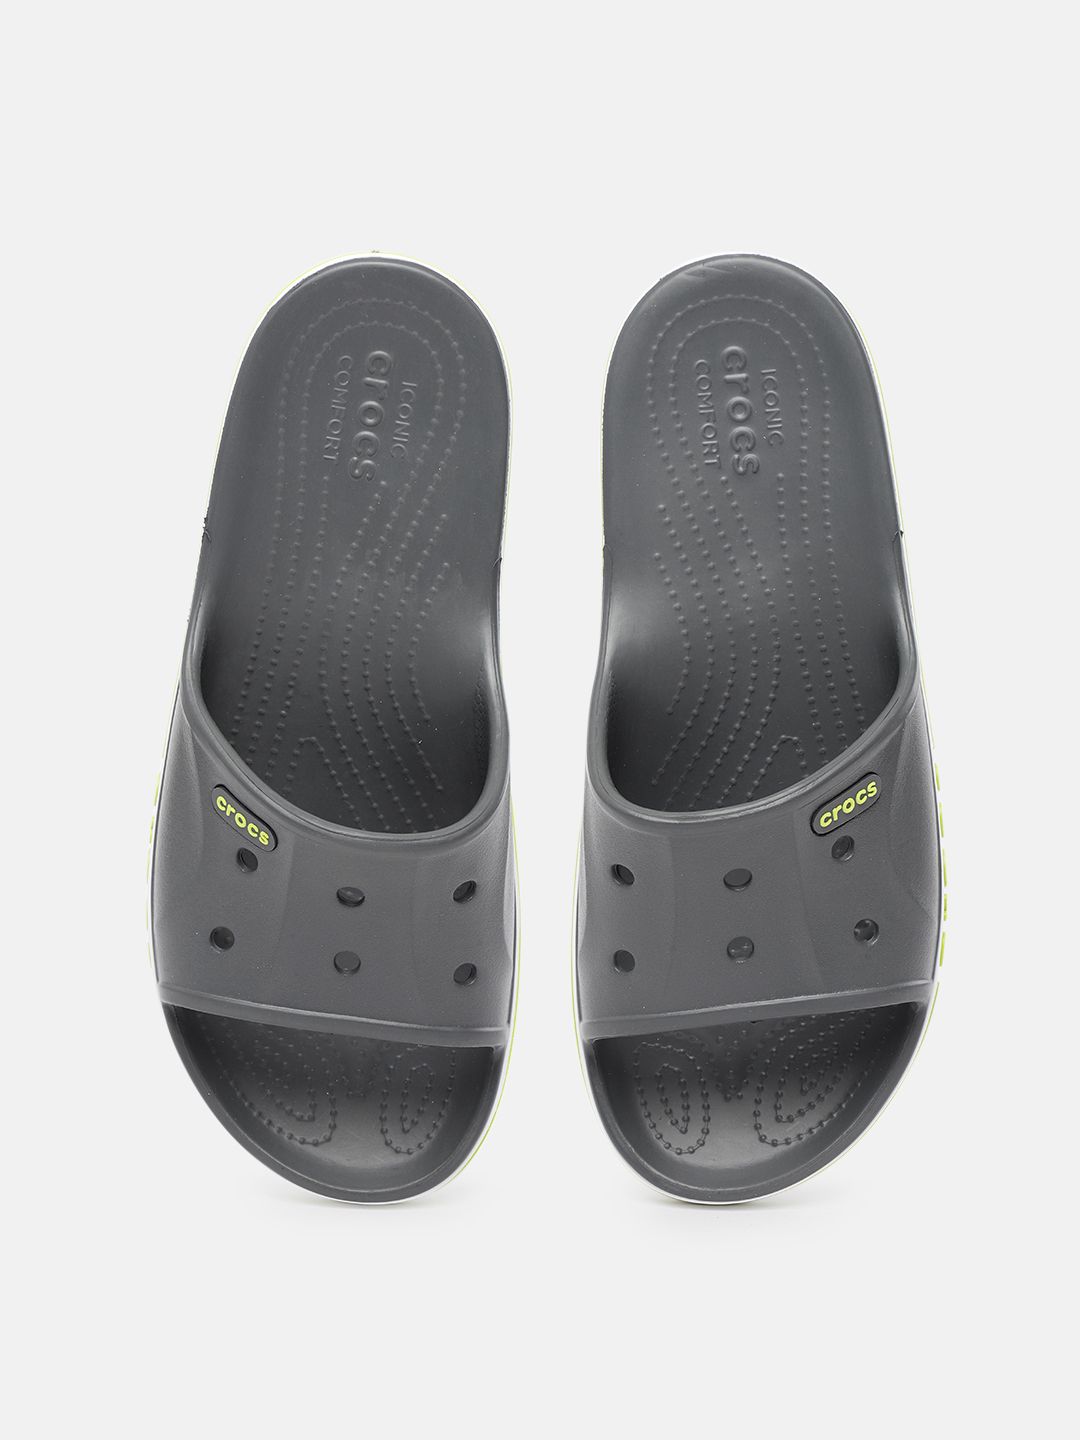 Crocs Unisex Grey Croslite Flip Flops Price in India